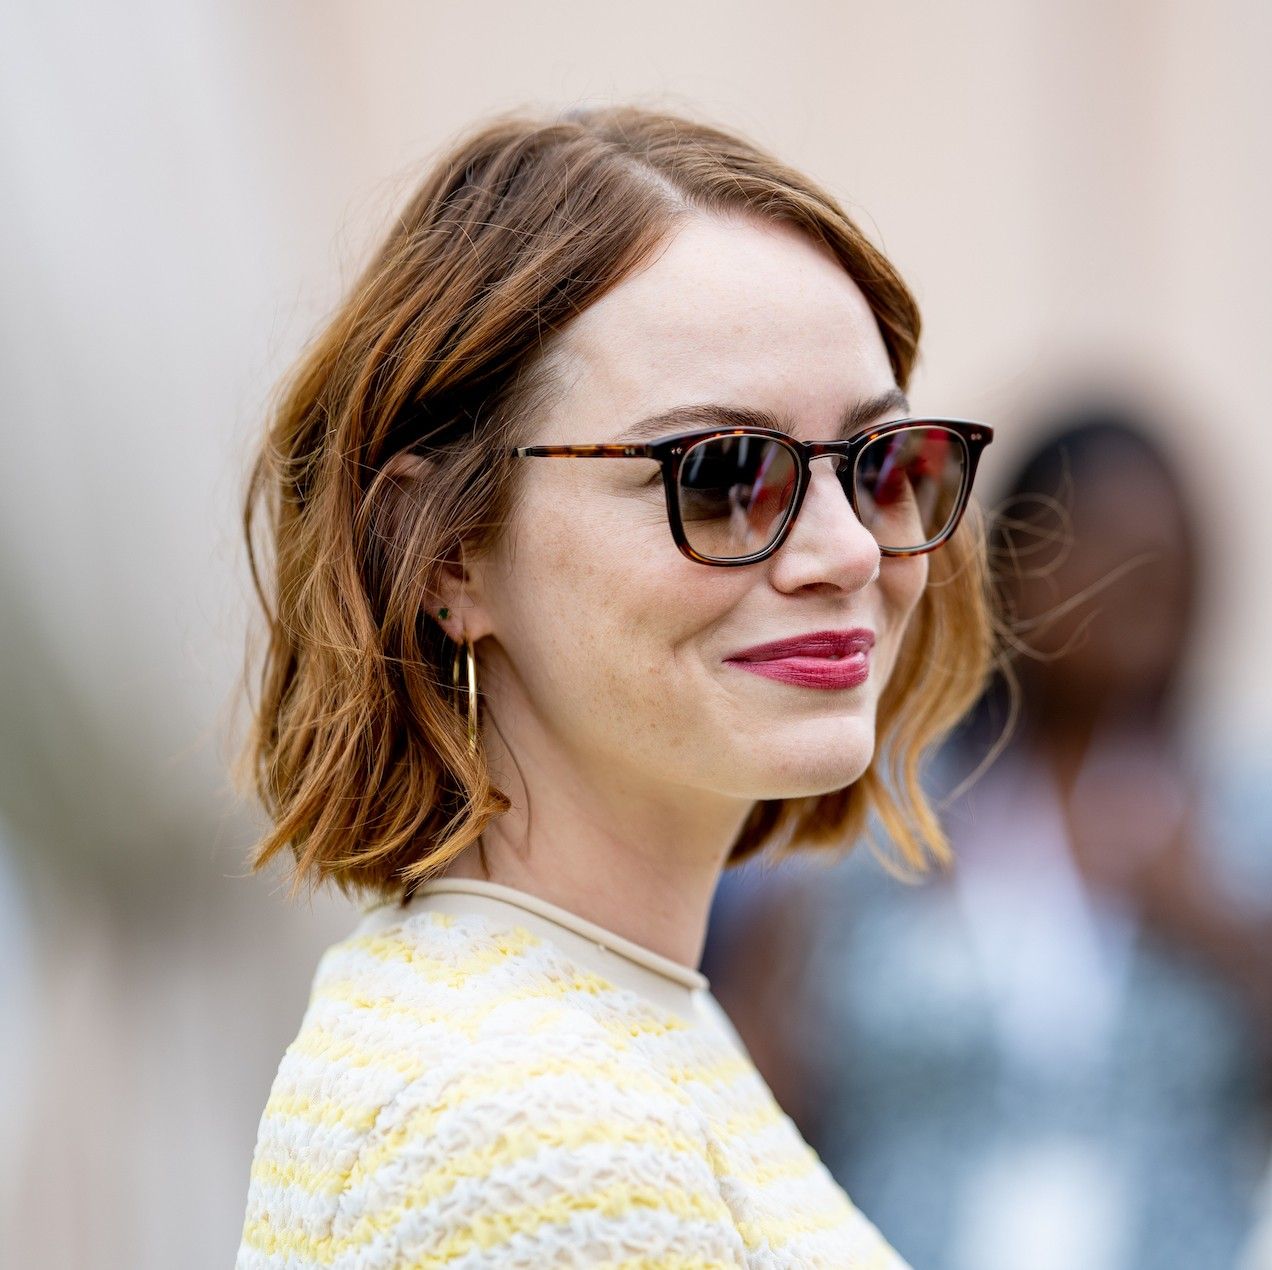 Emma Stone's Spidey sense of style